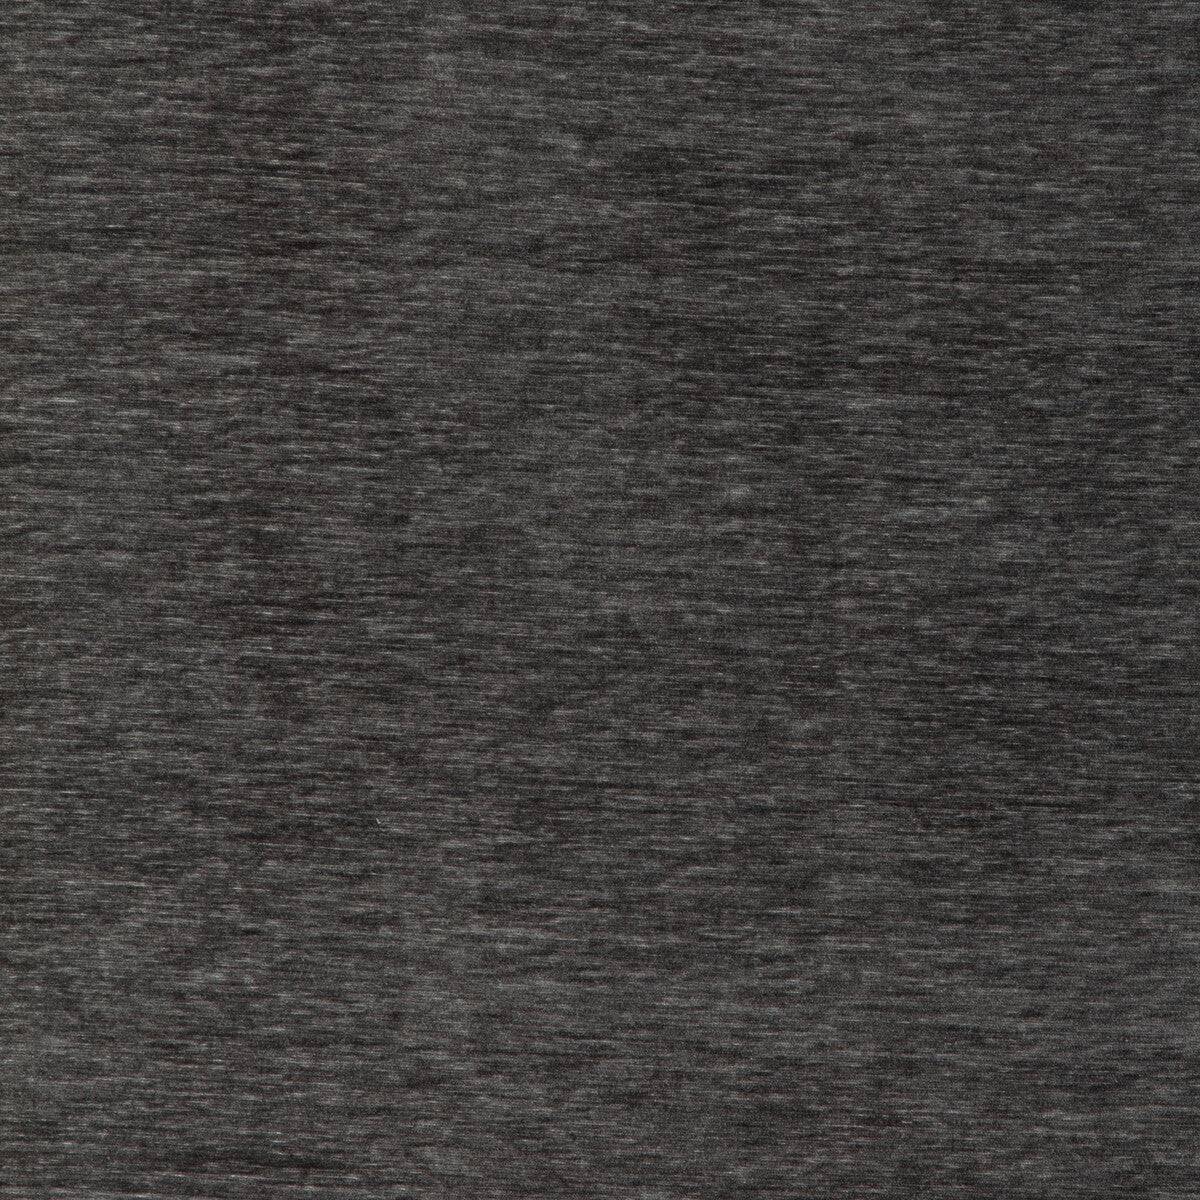 Kravet Smart fabric in 36662-21 color - pattern 36662.21.0 - by Kravet Smart in the Performance Kravetarmor collection